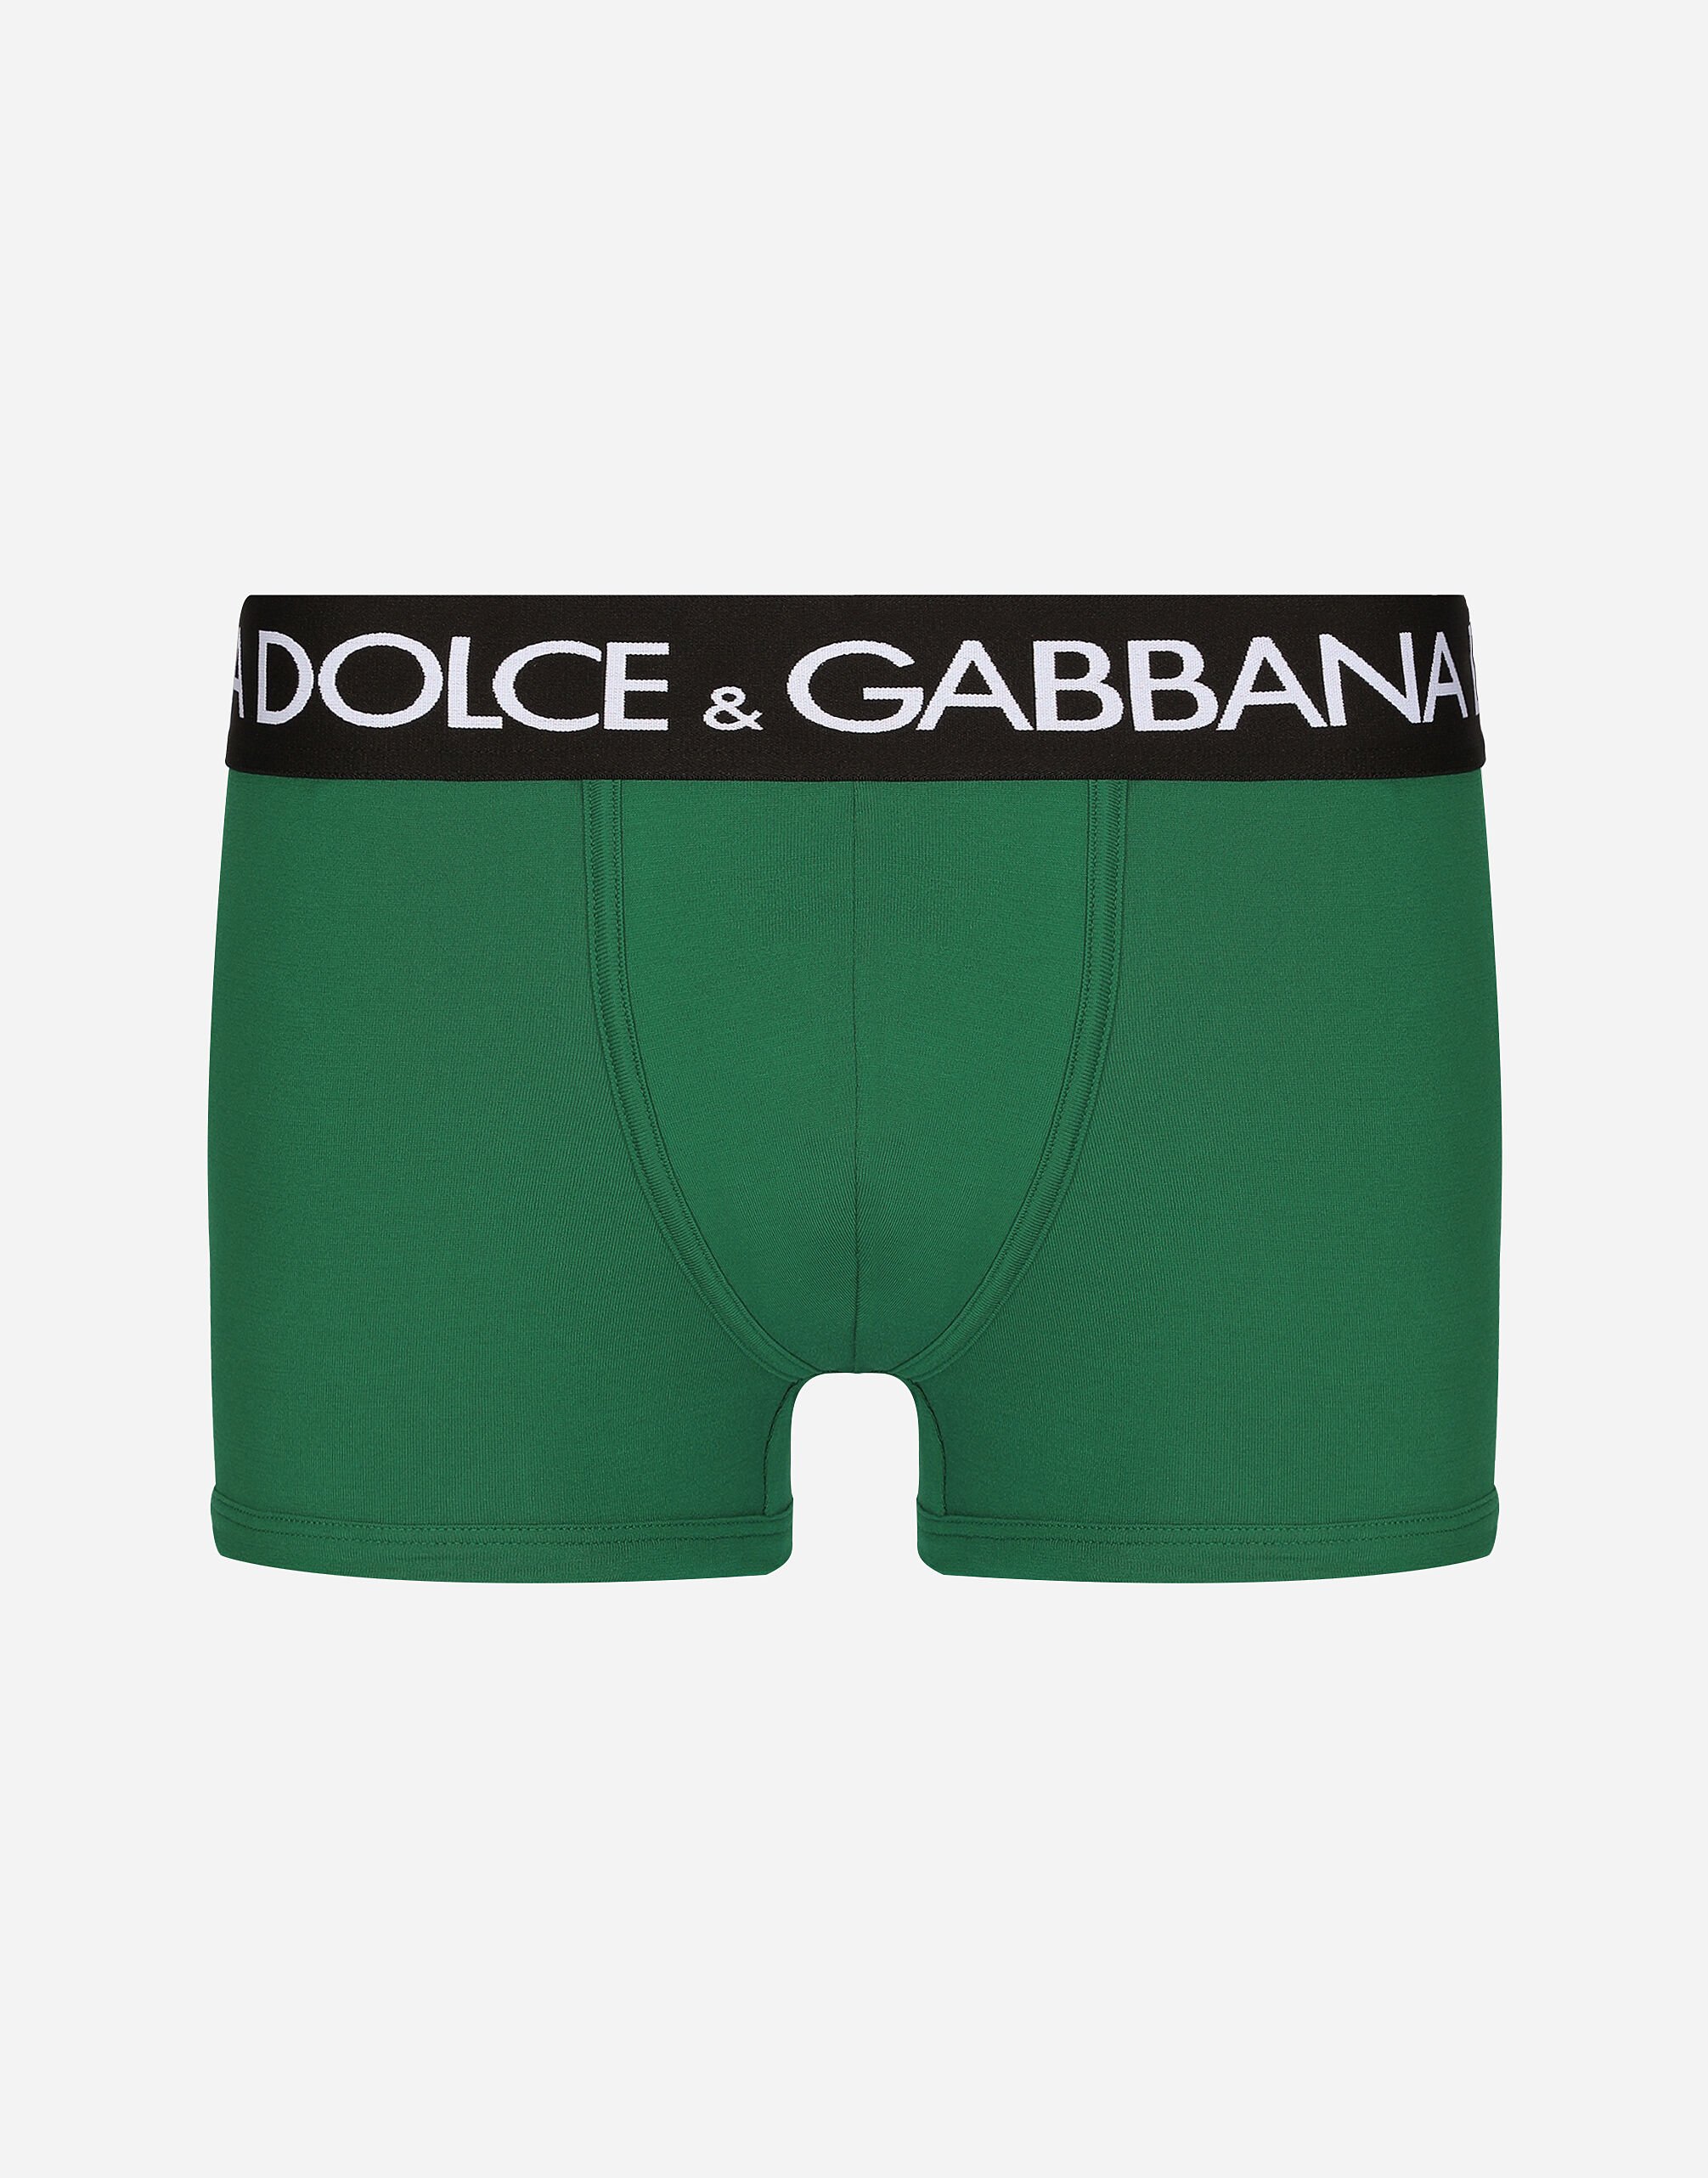 Dolce & Gabbana 2wayストレッチ コットンジャージー レギュラーフィット ボクサー プリ G031TTHI1SV